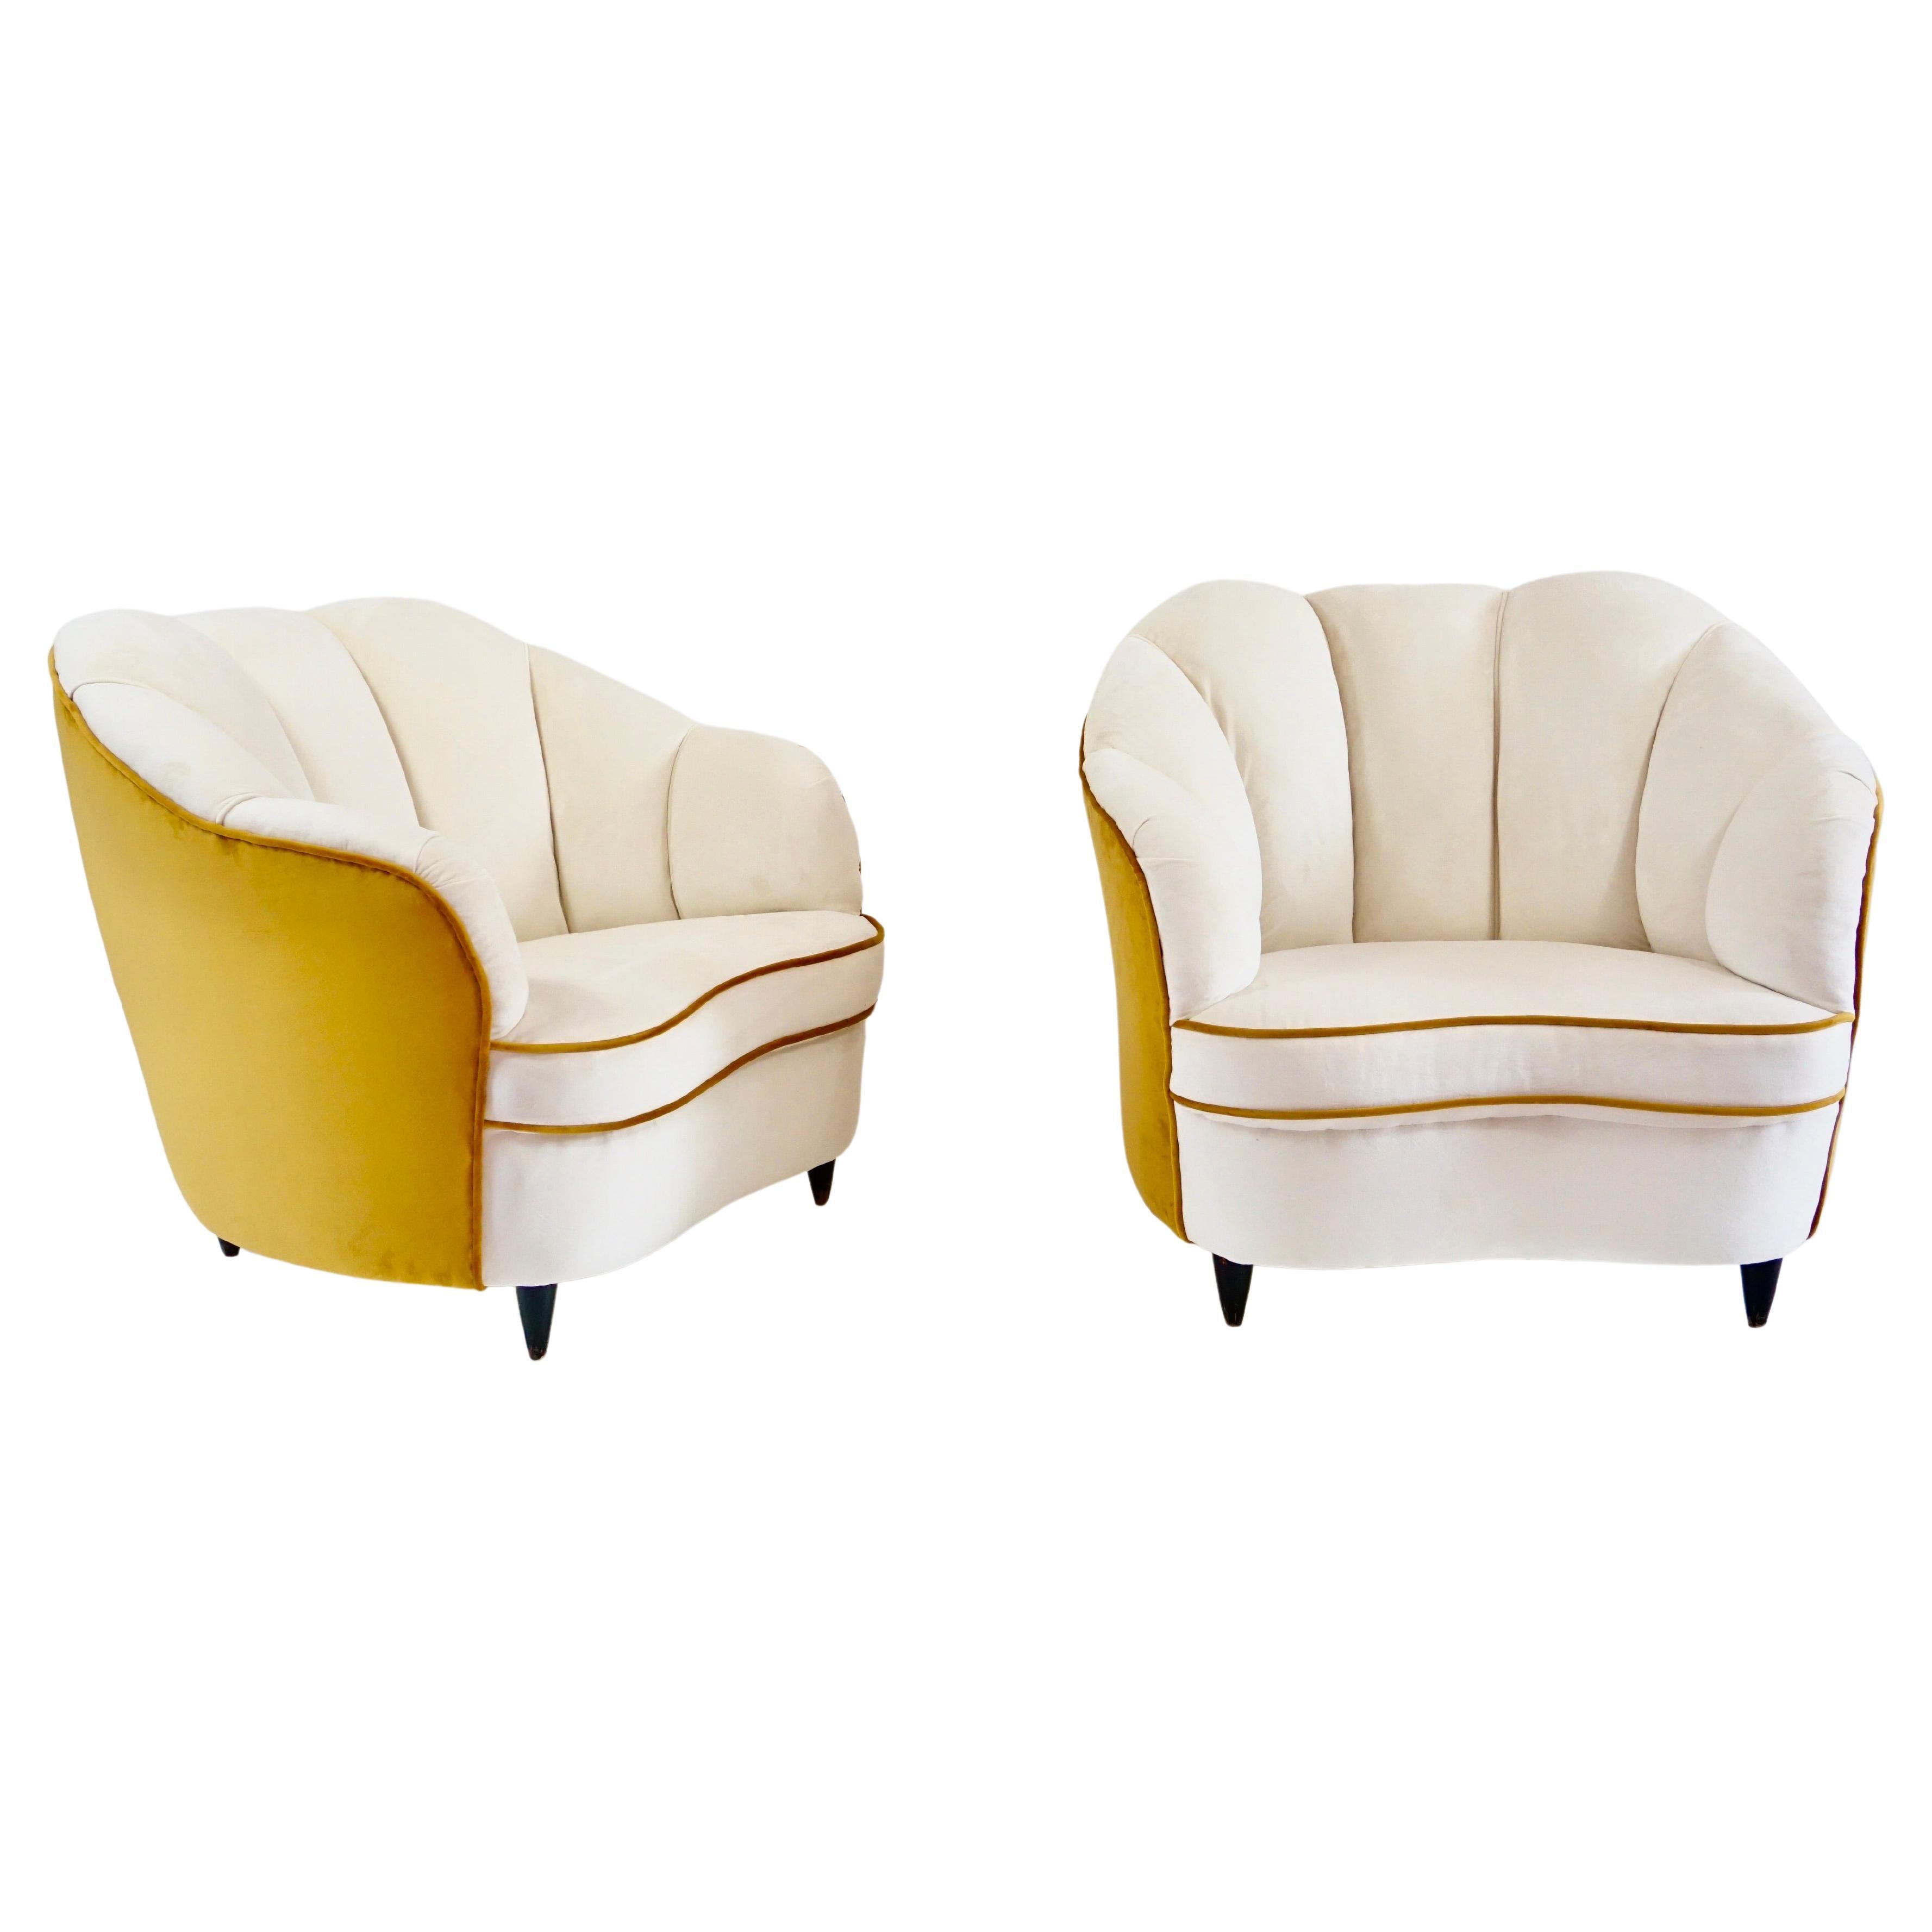 pair of Gio Ponti  velvet bicolor white and yellow armchairs, Casa Giardino 1940 For Sale